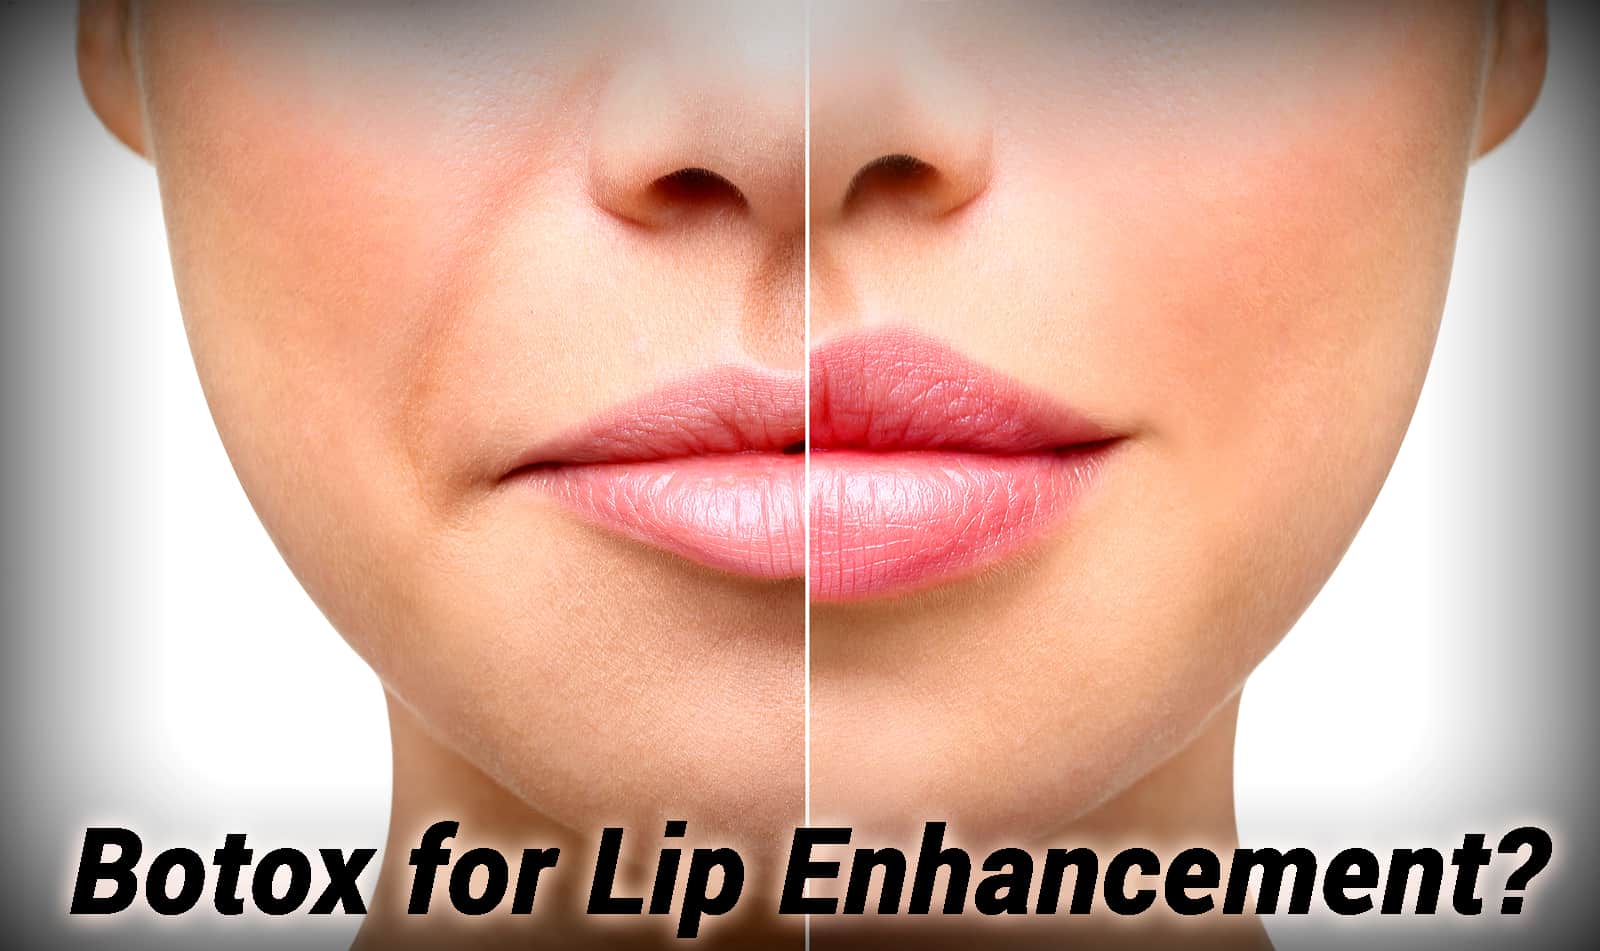 Lip Enhancement with Botox